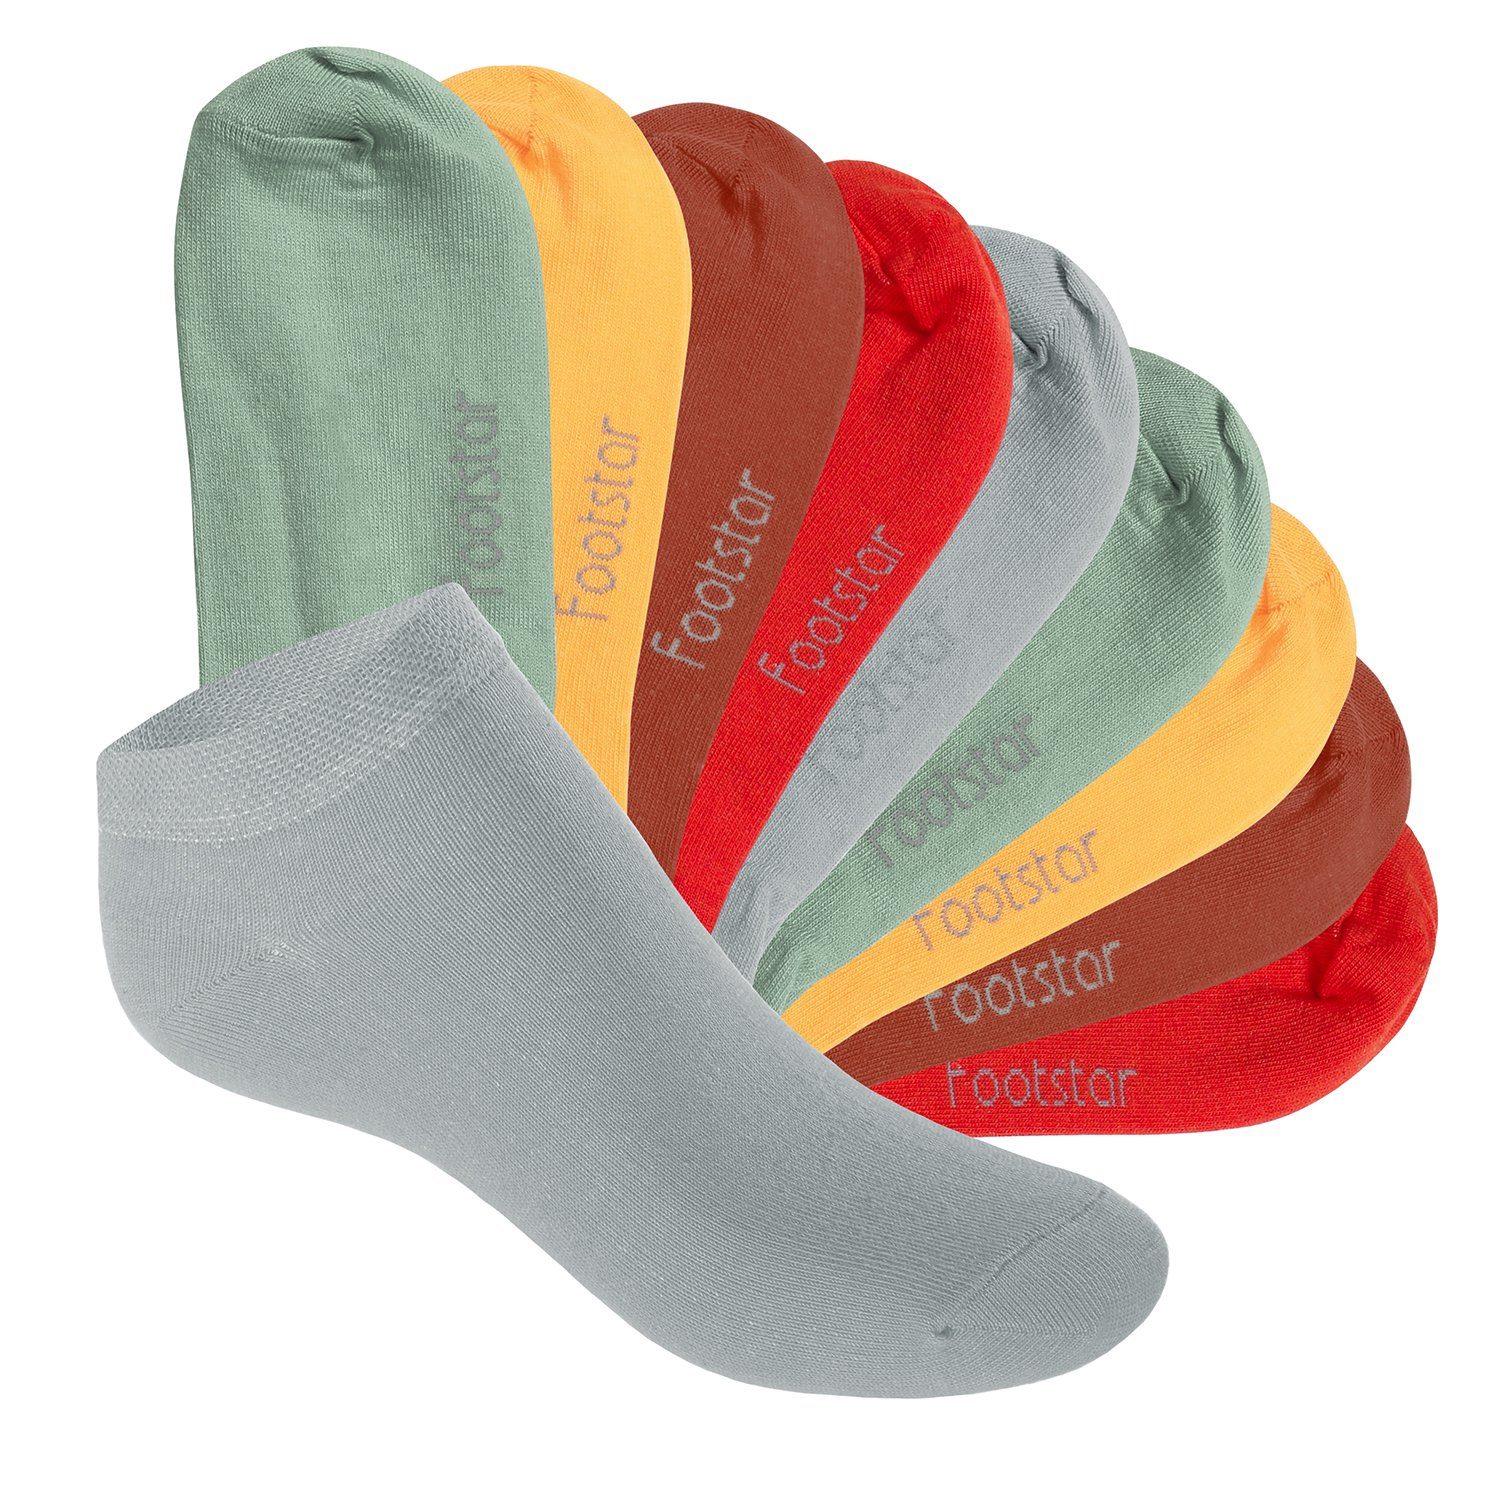 Footstar Kurzsocken Kinder Sneaker Socken (10 Paar) - Kurze Socken für Kids Urban Camouflage